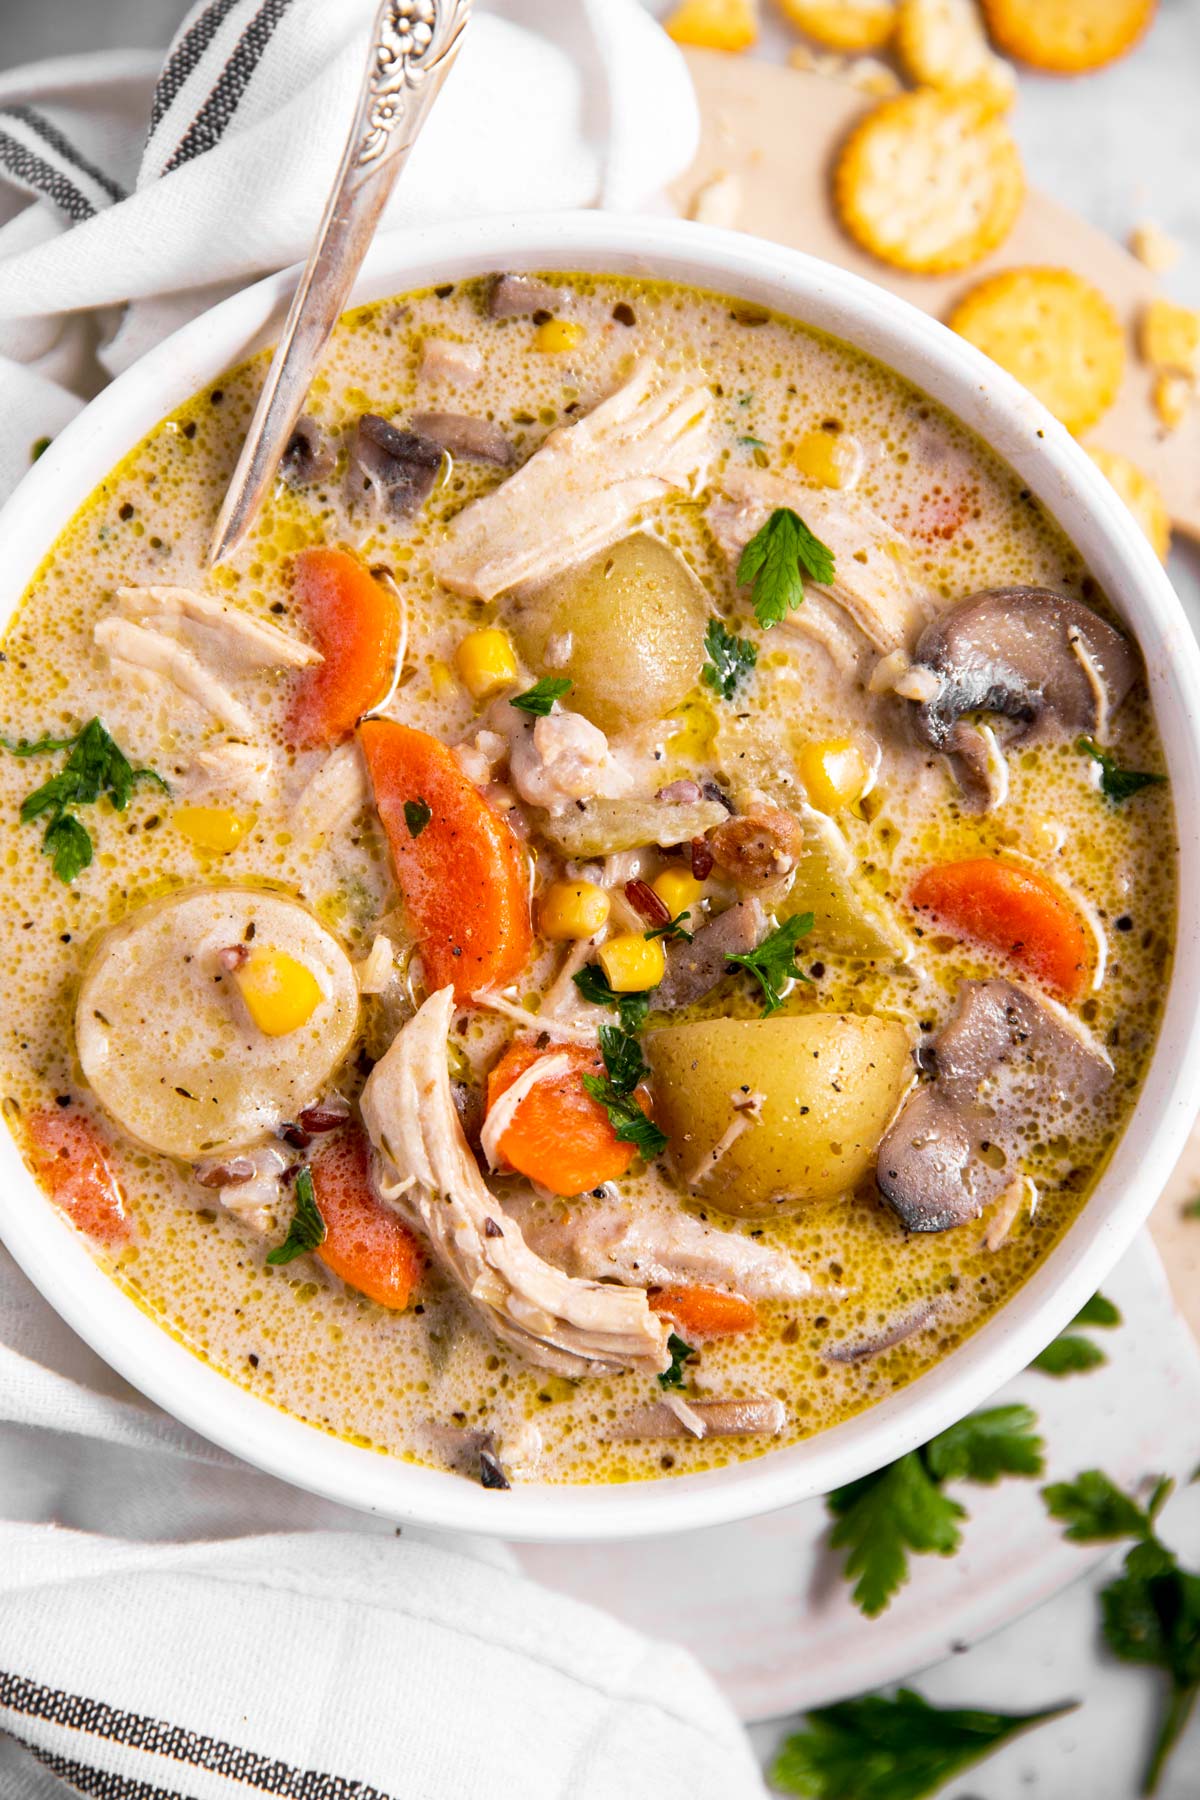 https://www.savorynothings.com/wp-content/uploads/2021/11/leftover-turkey-soup-recipe-image-3.jpg